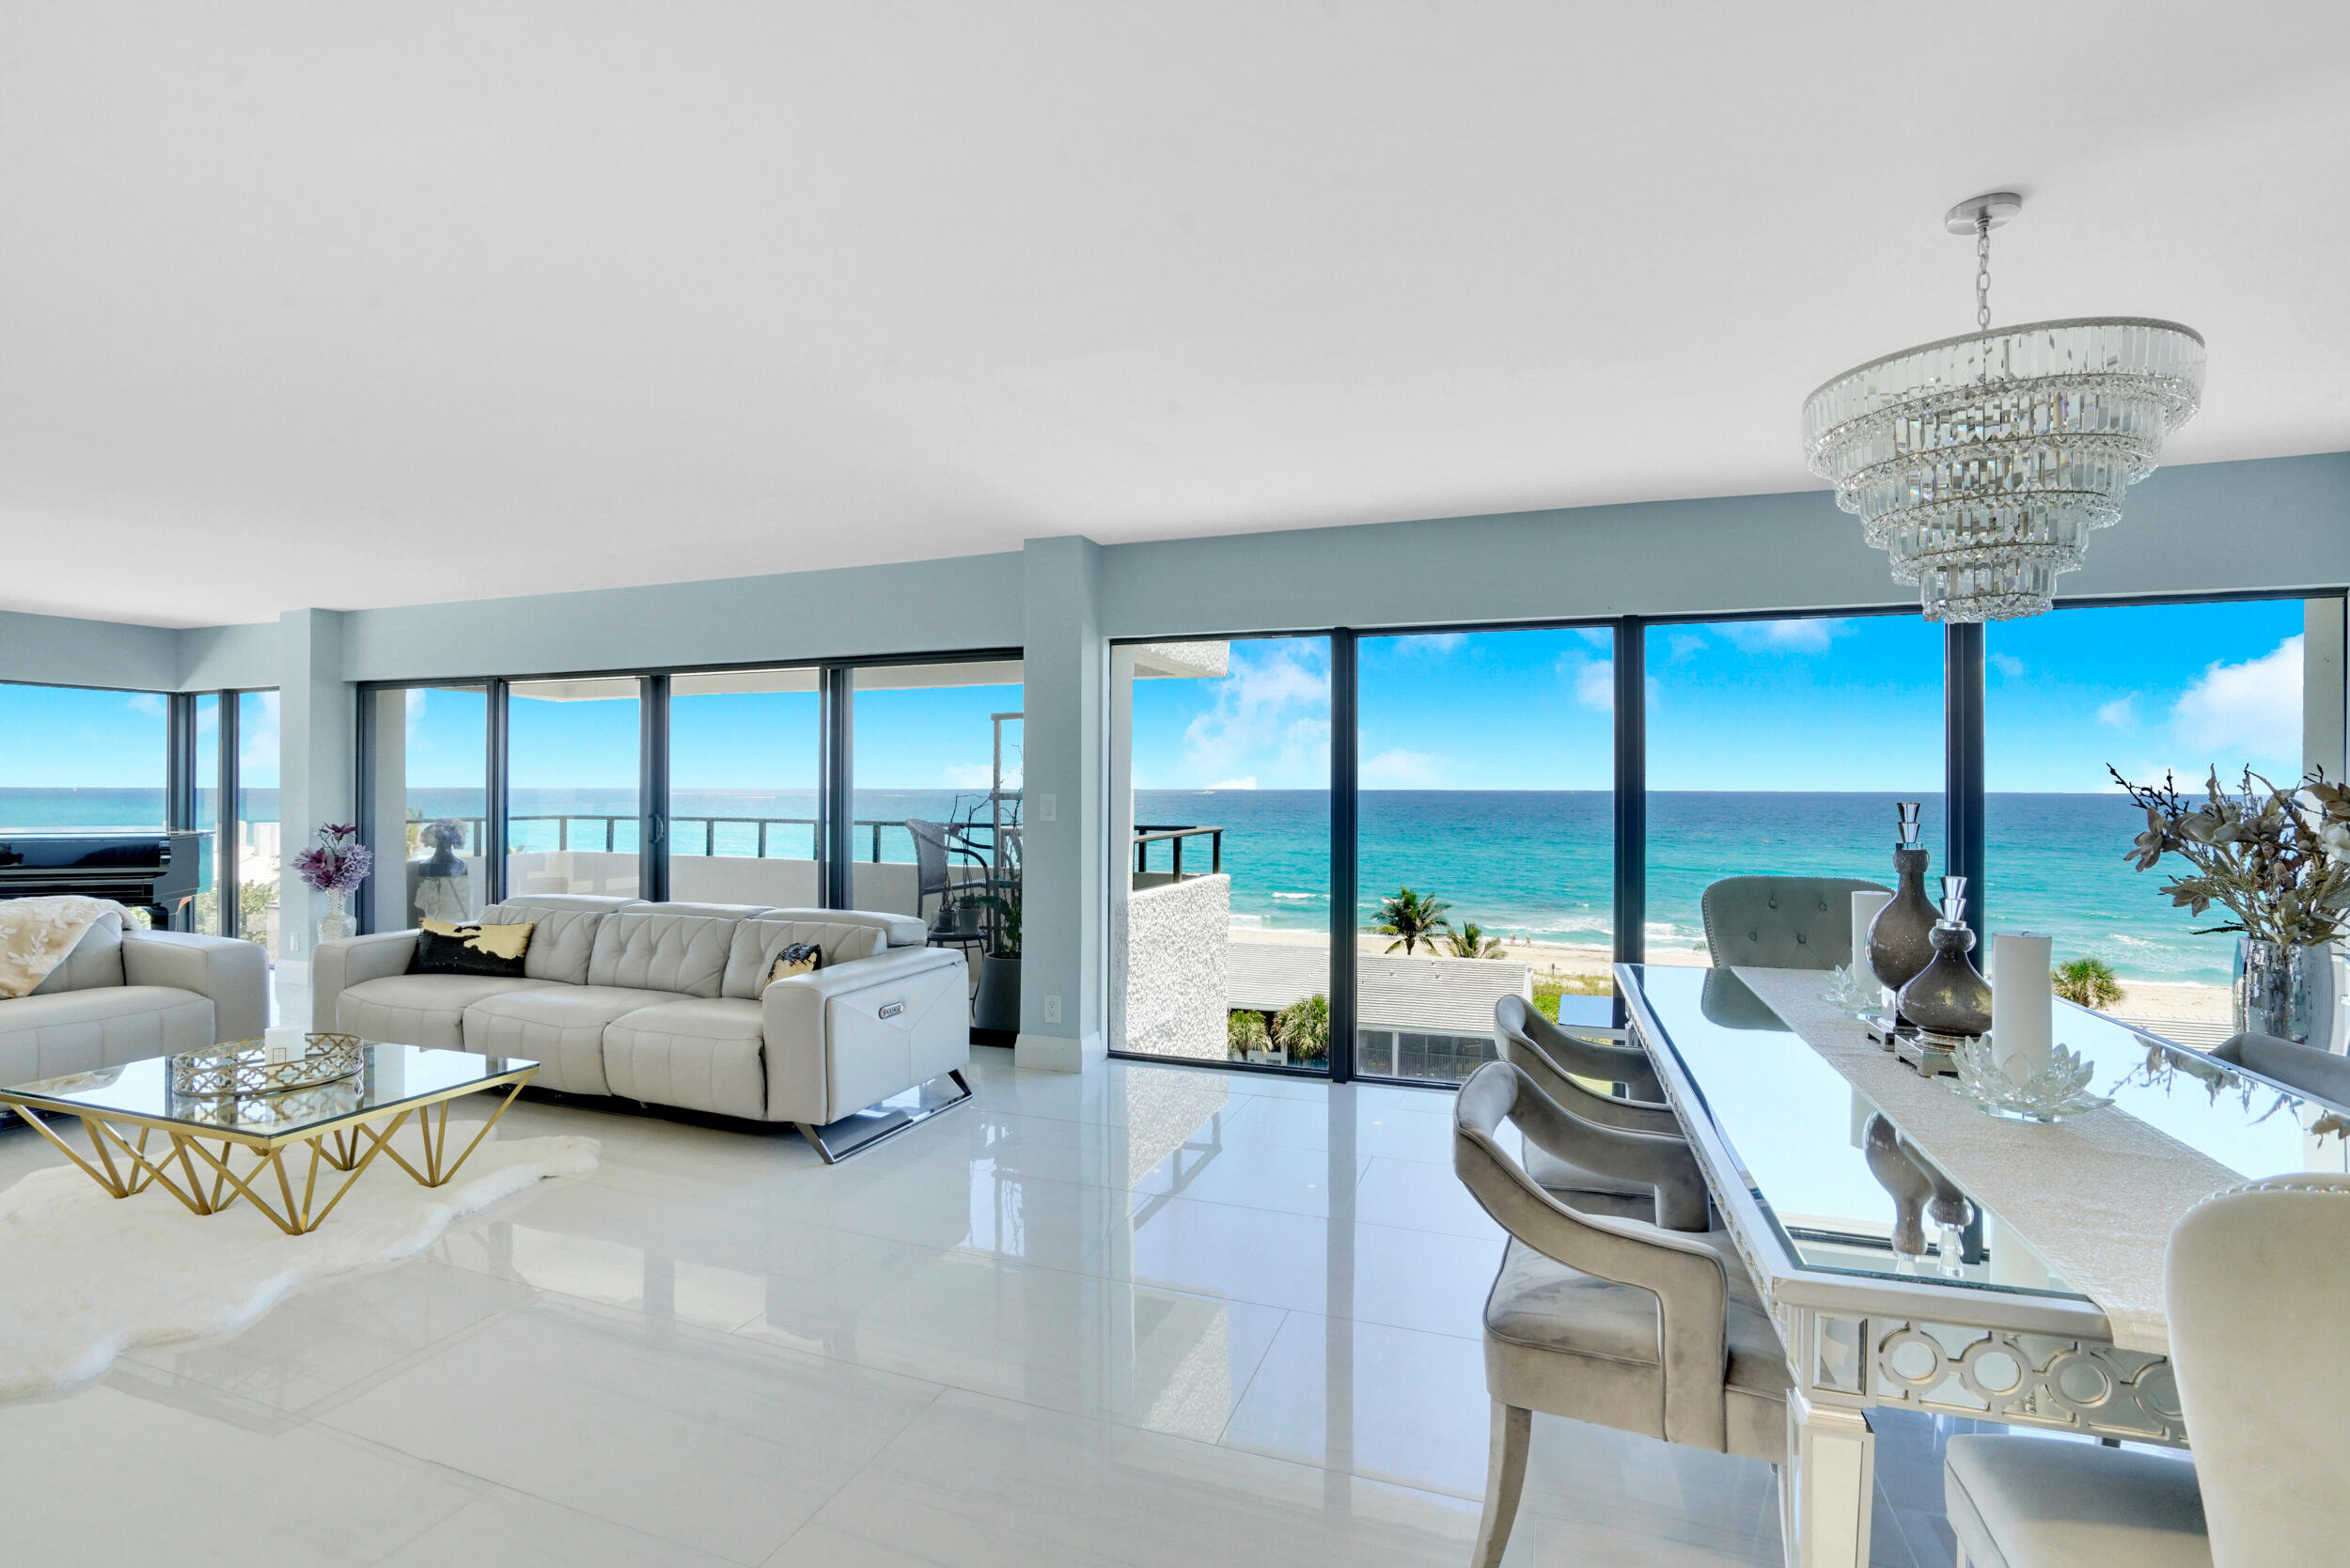 Property for Sale at 2175 S Ocean Boulevard Blvd 506, Delray Beach, Palm Beach County, Florida - Bedrooms: 2 
Bathrooms: 2  - $1,650,000